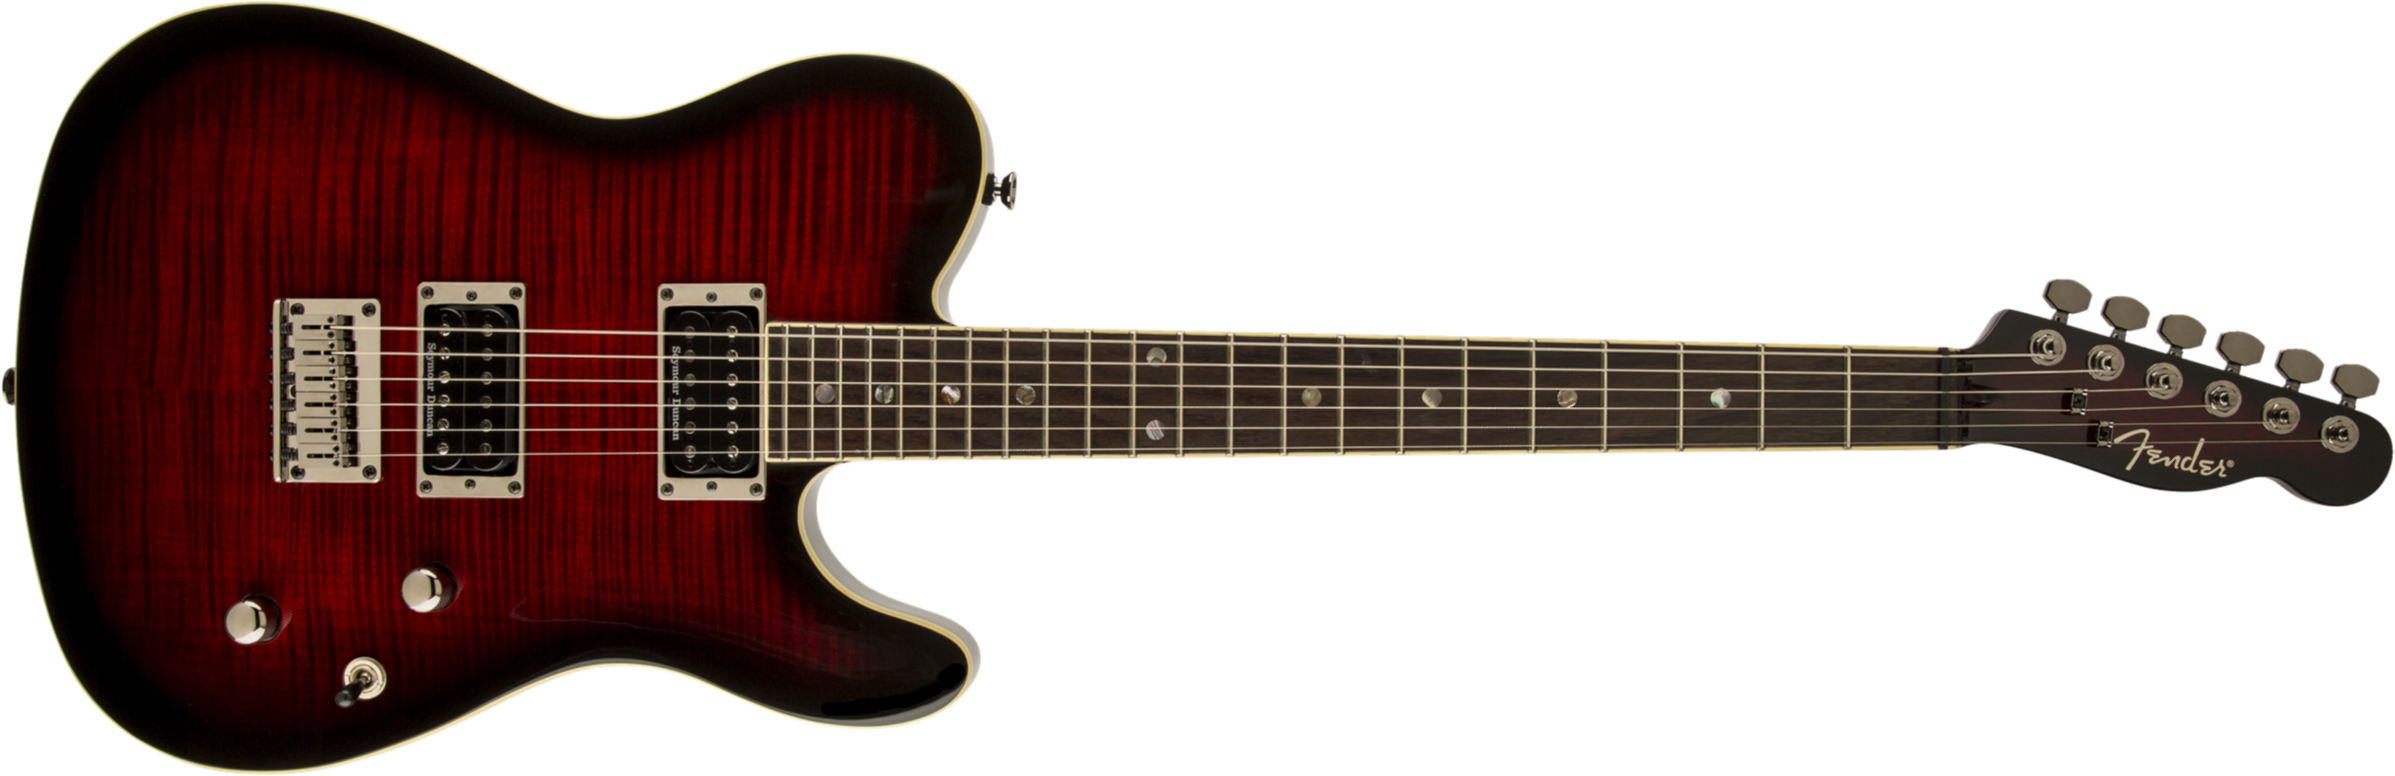 Fender Telecaster Korean Special Edition Custom Fmt (lau) - Black Cherry Burst - E-Gitarre in Teleform - Main picture